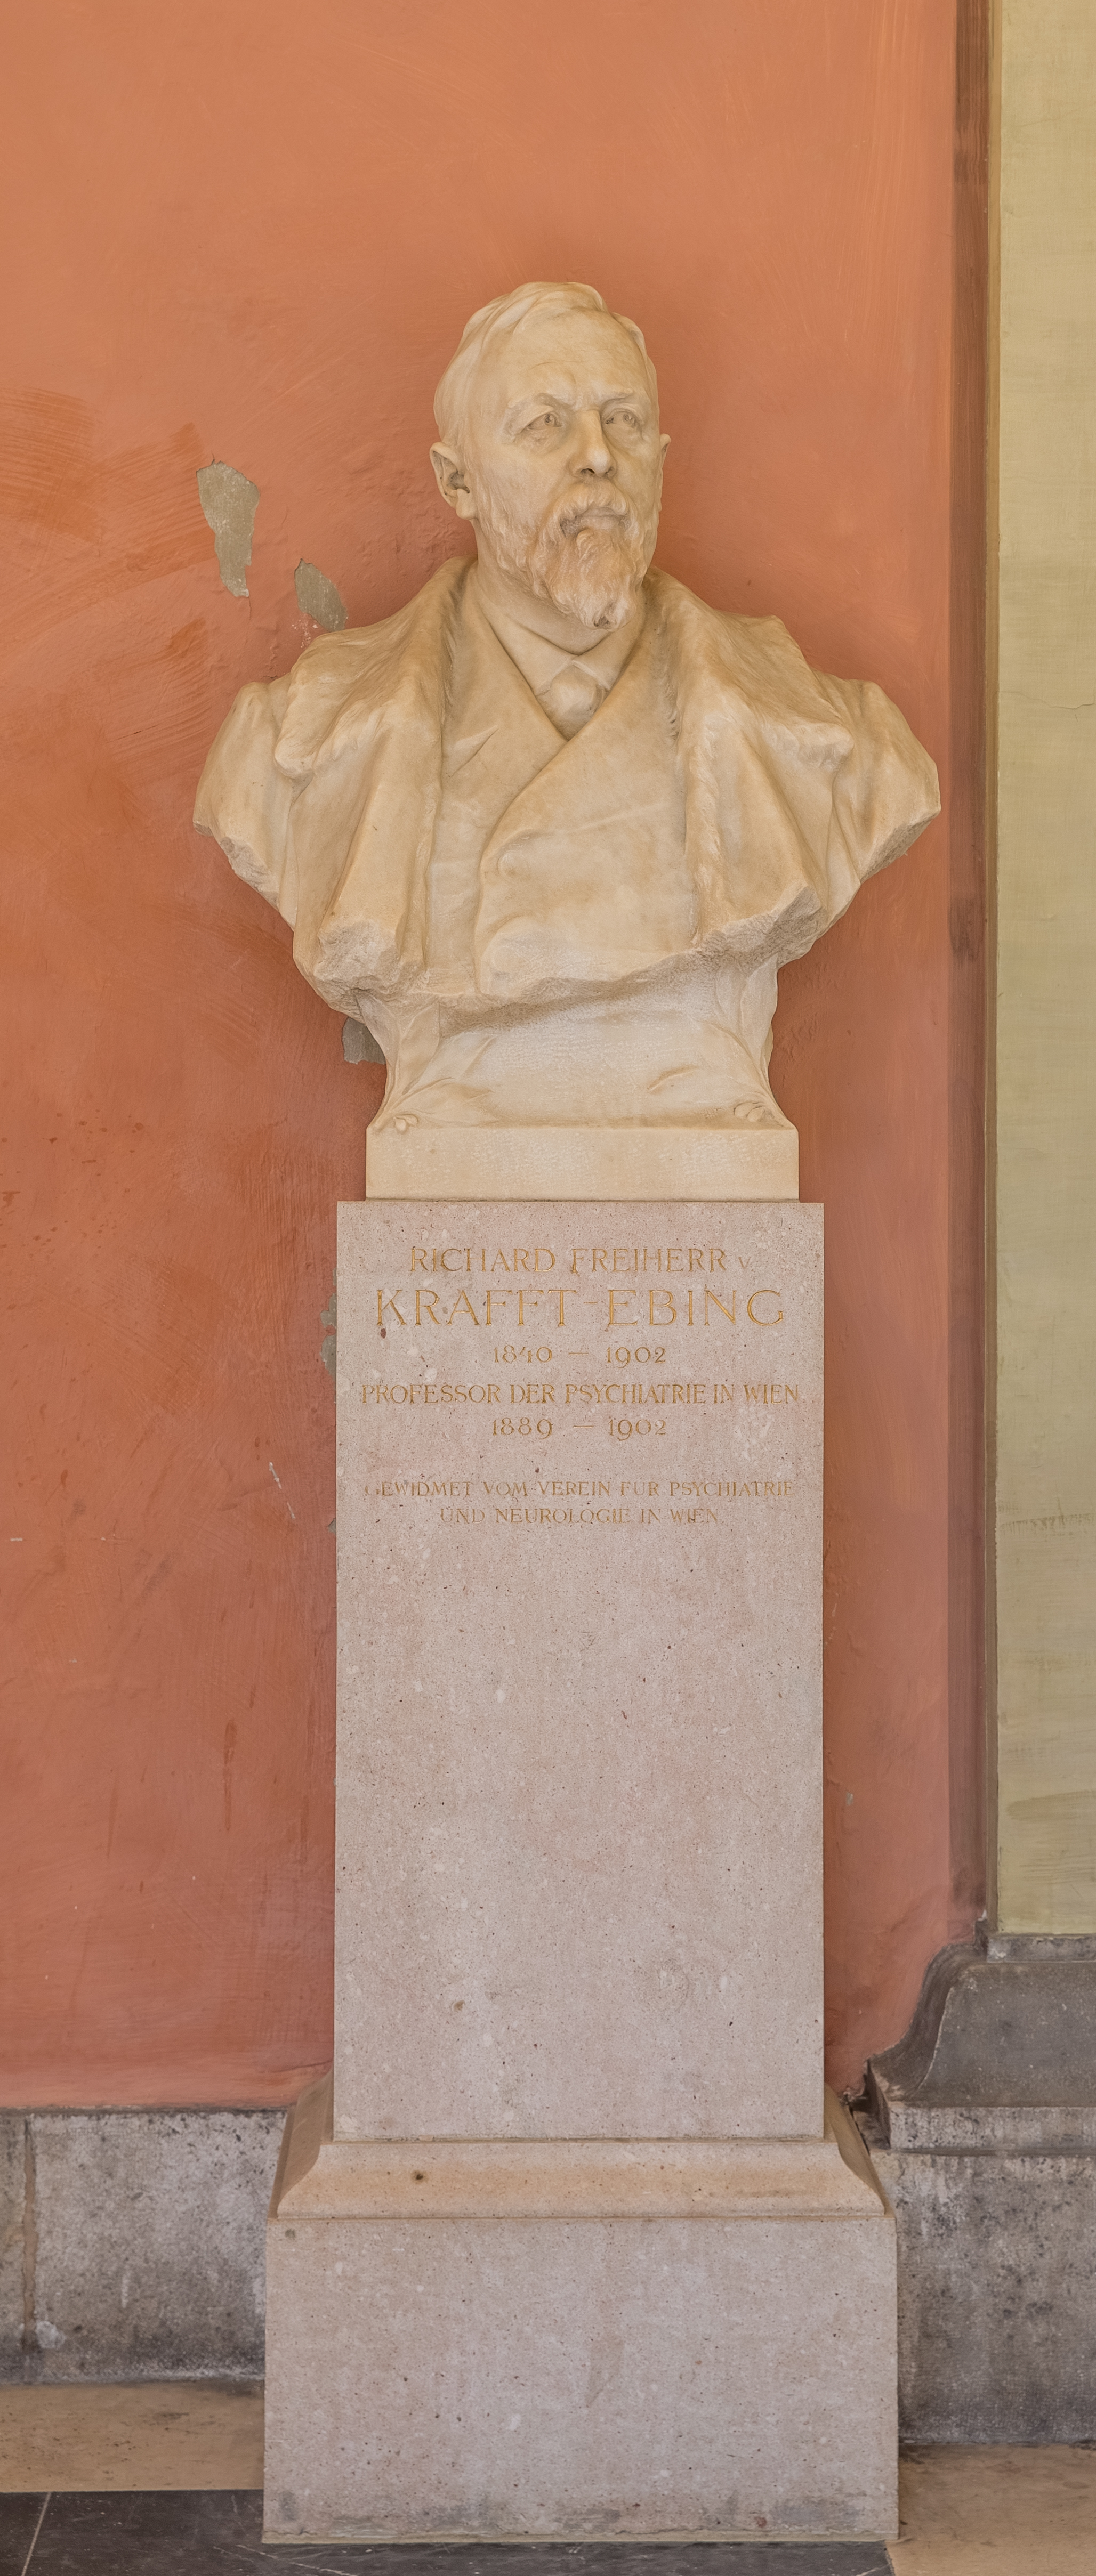 Richard von Krafft-Ebing (1840-1902), psychiatrist, Nr. 136, bust (marble) in the Arkadenhof of the University of Vienna-3254-HDR